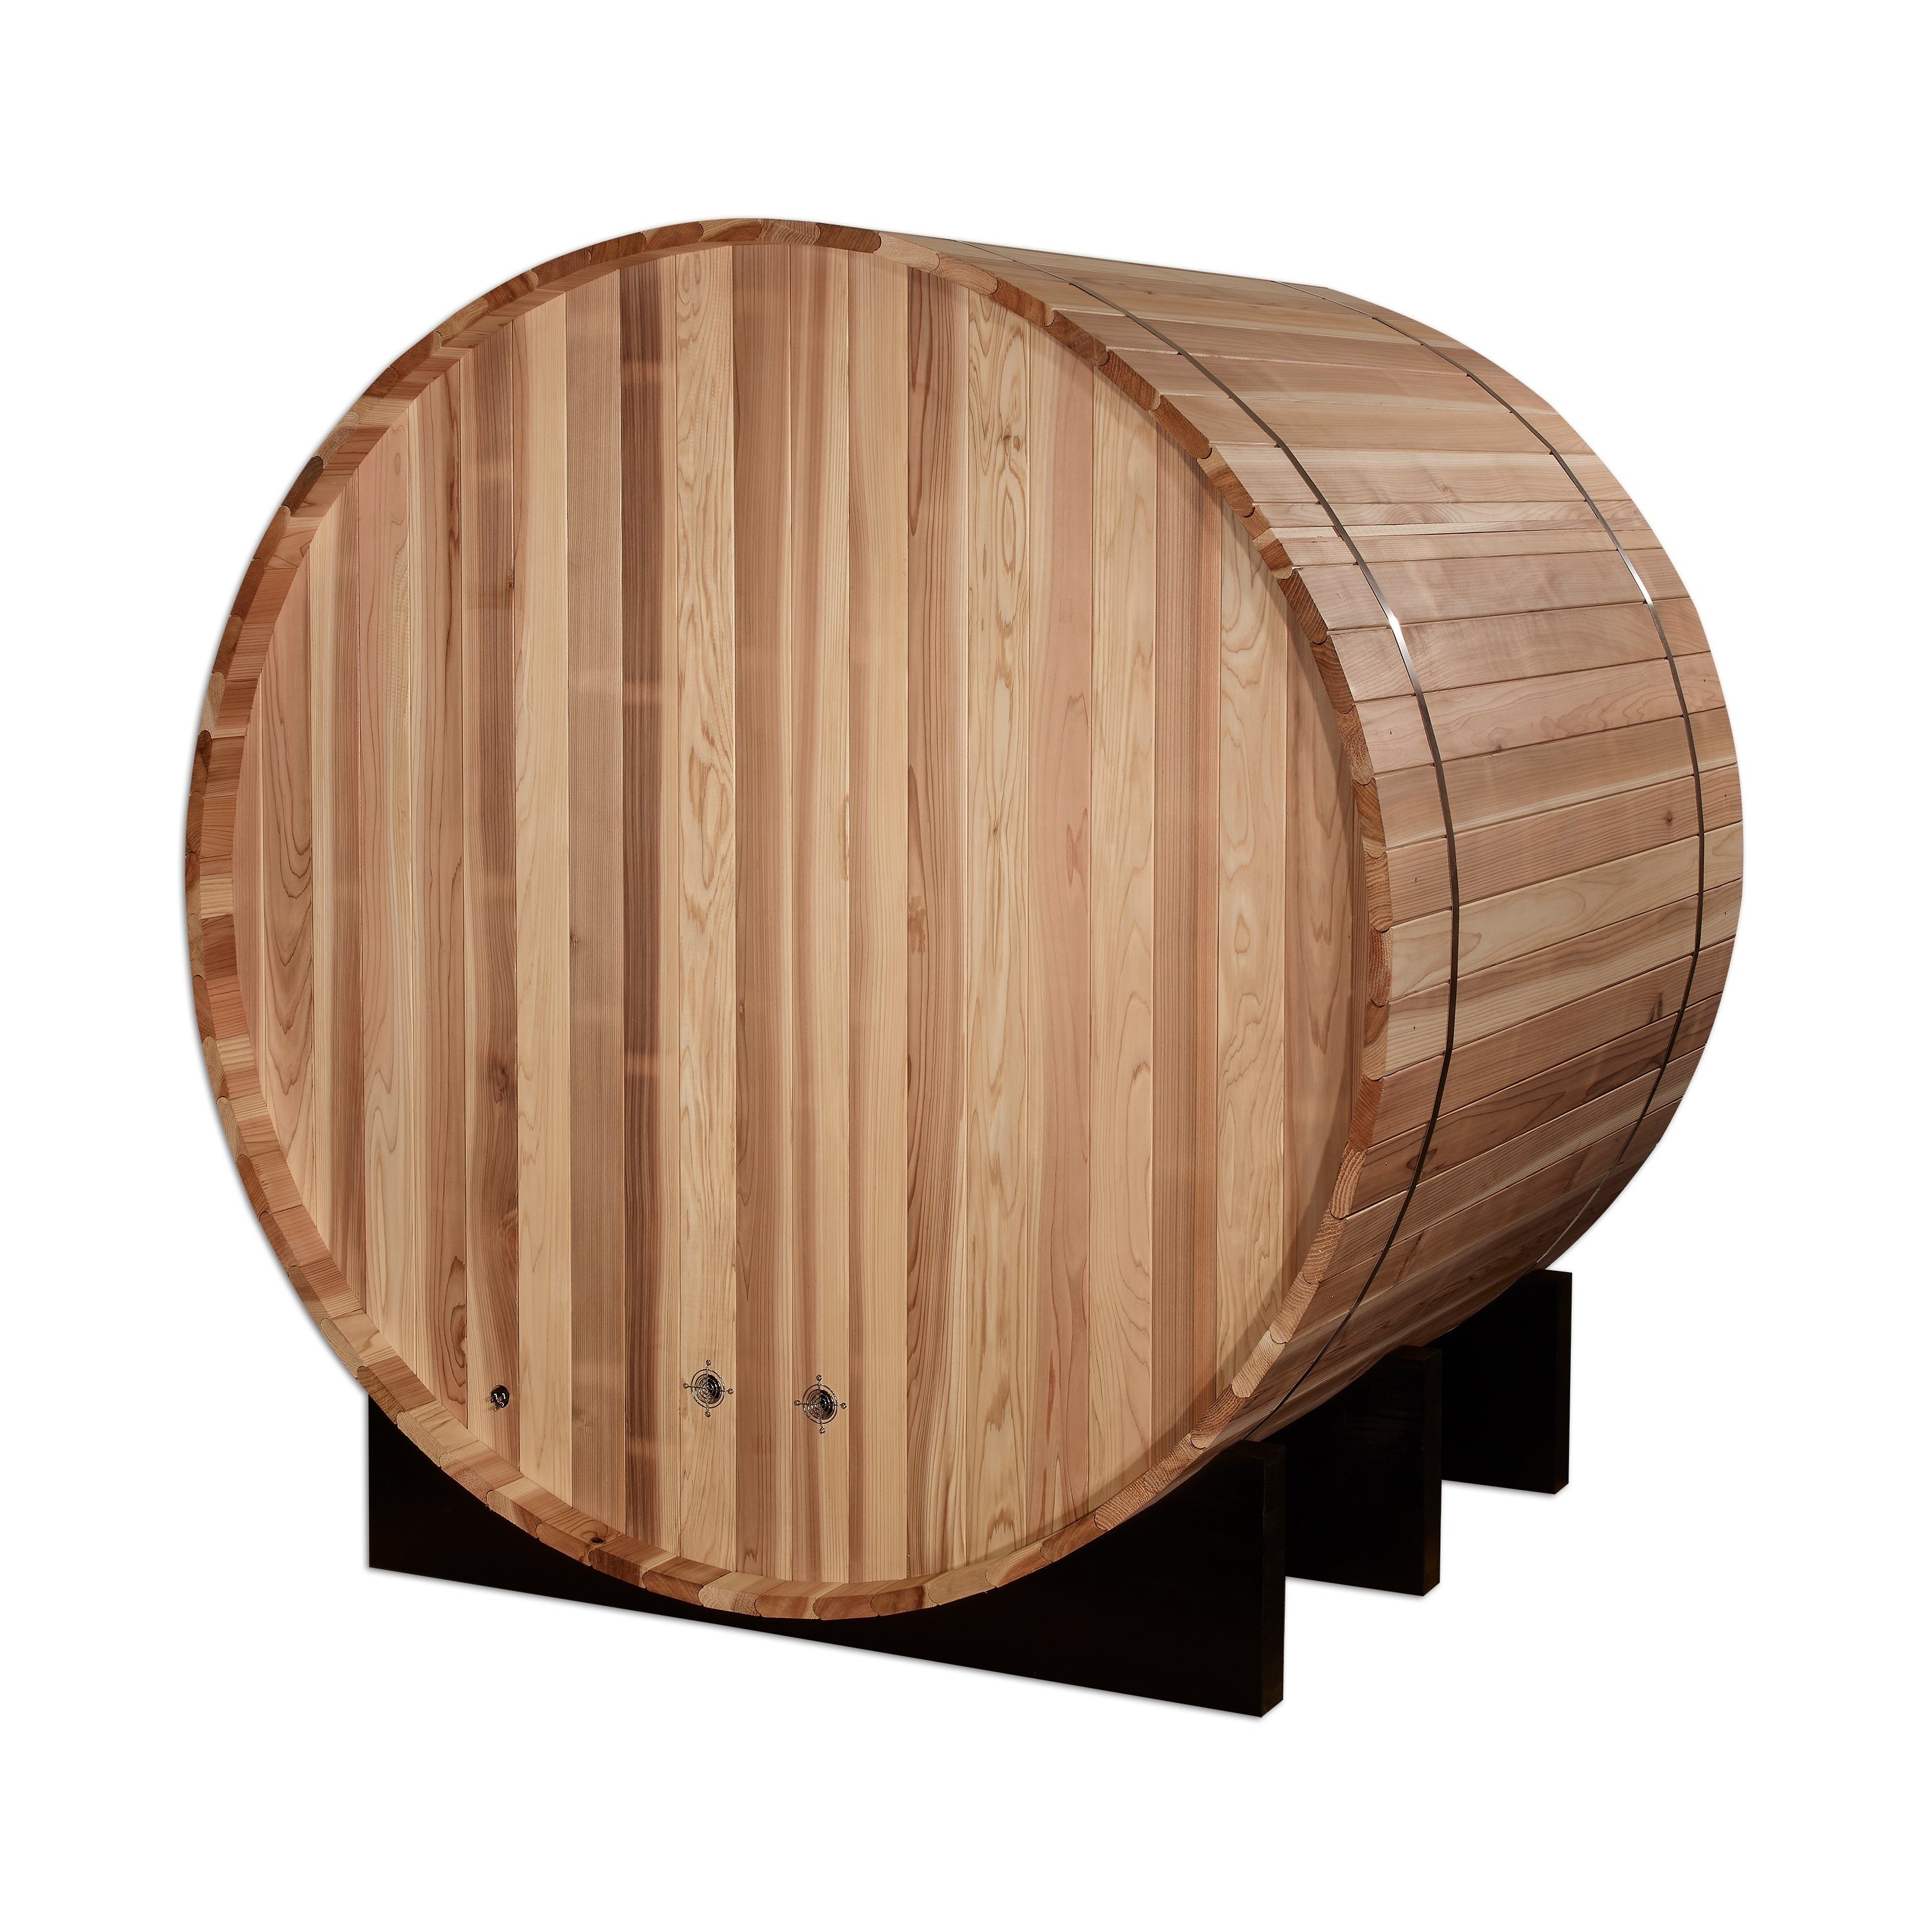 Golden Designs "St. Moritz" 2-Person Outdoor Barrel Traditional Steam Sauna -  Pacific Cedar